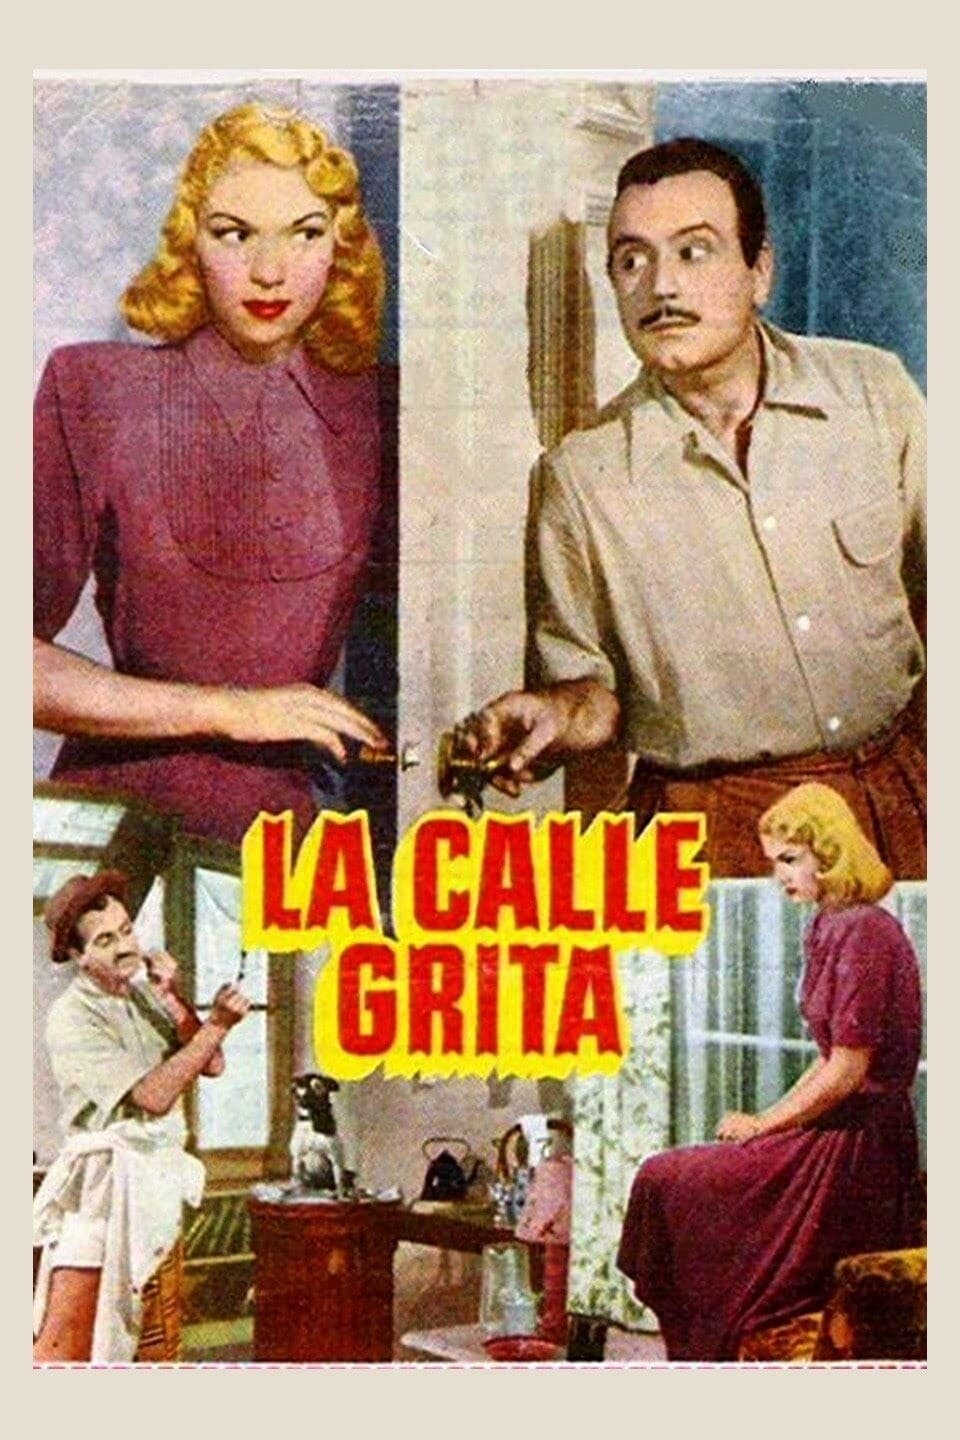 La calle grita (1948)